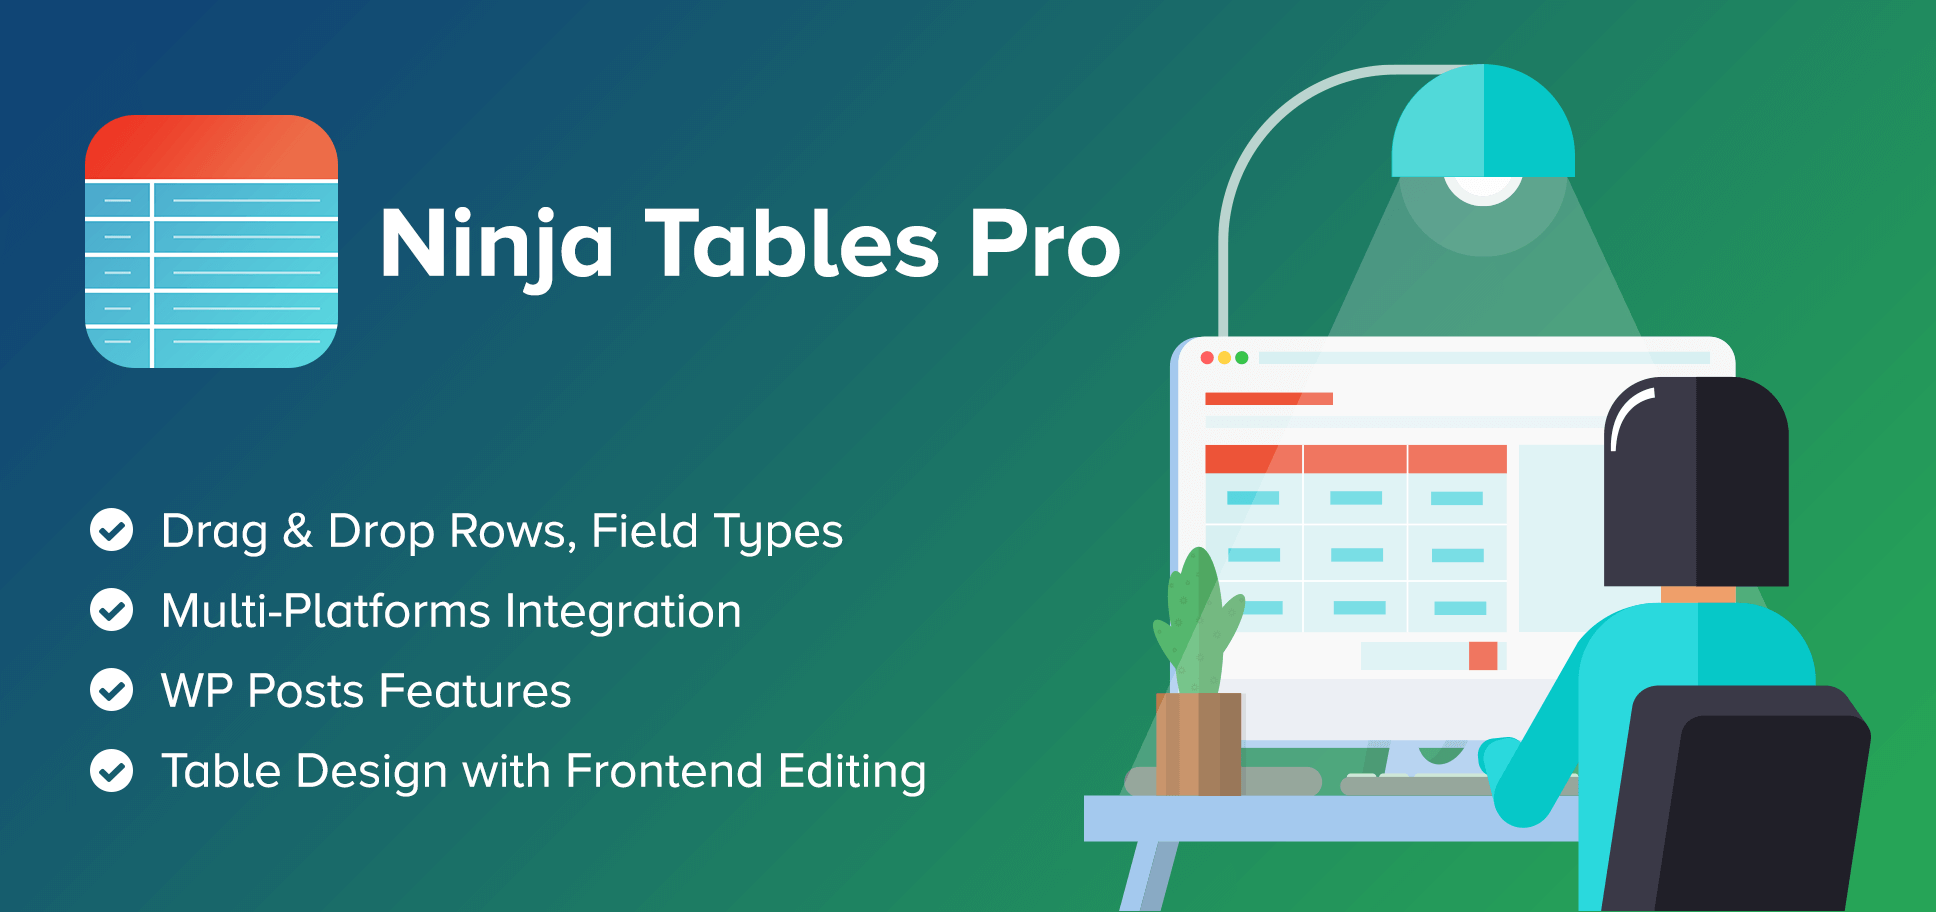 Ninja Tables Pro.png